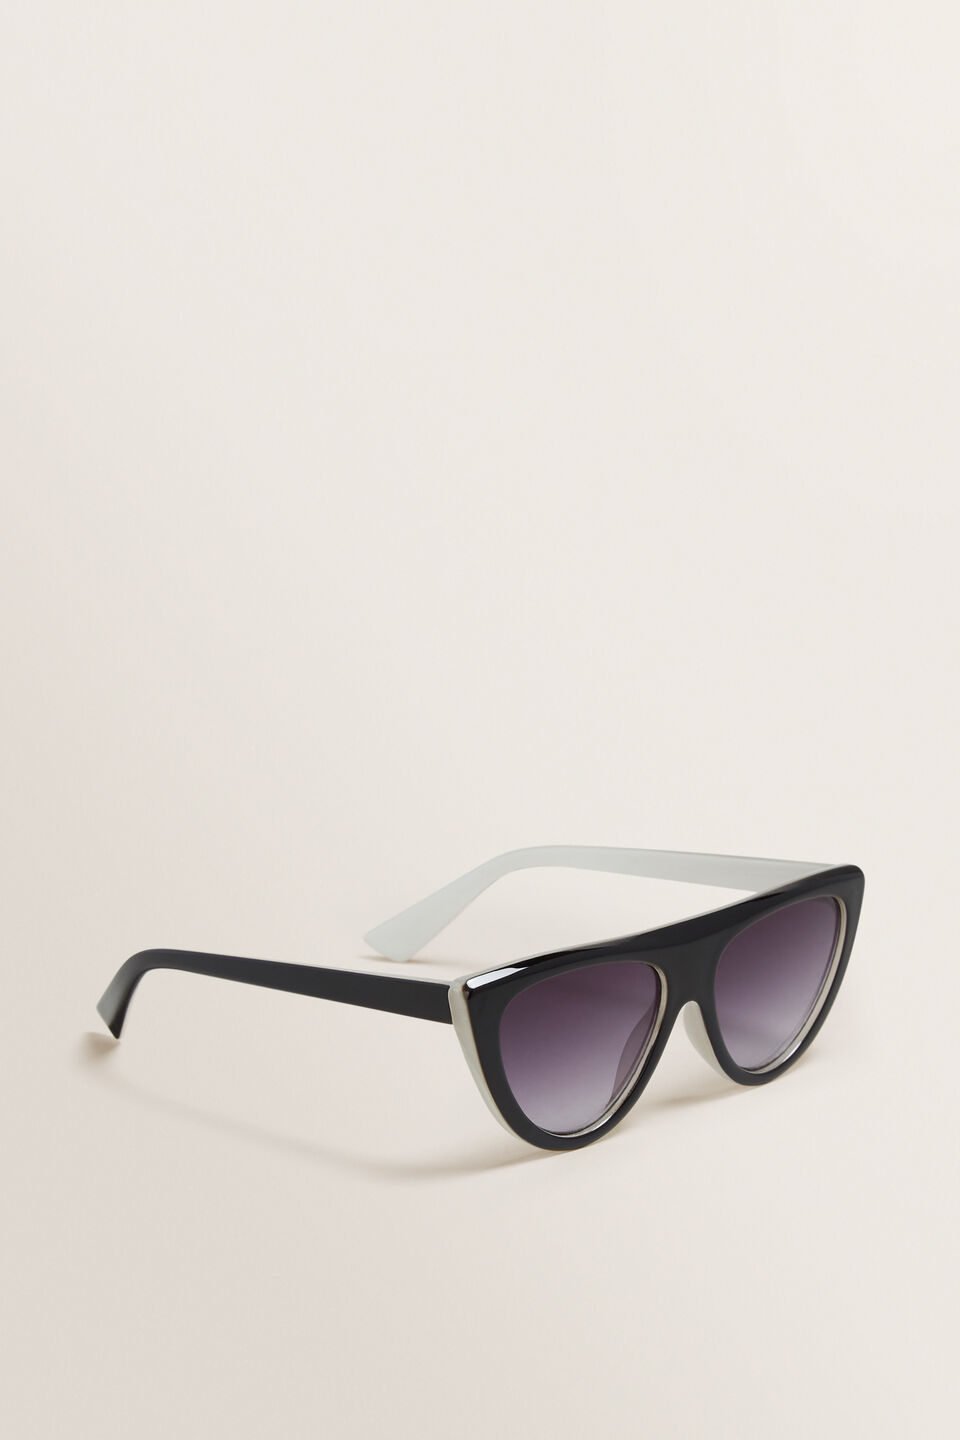 Zara Flat Top Sunglasses  